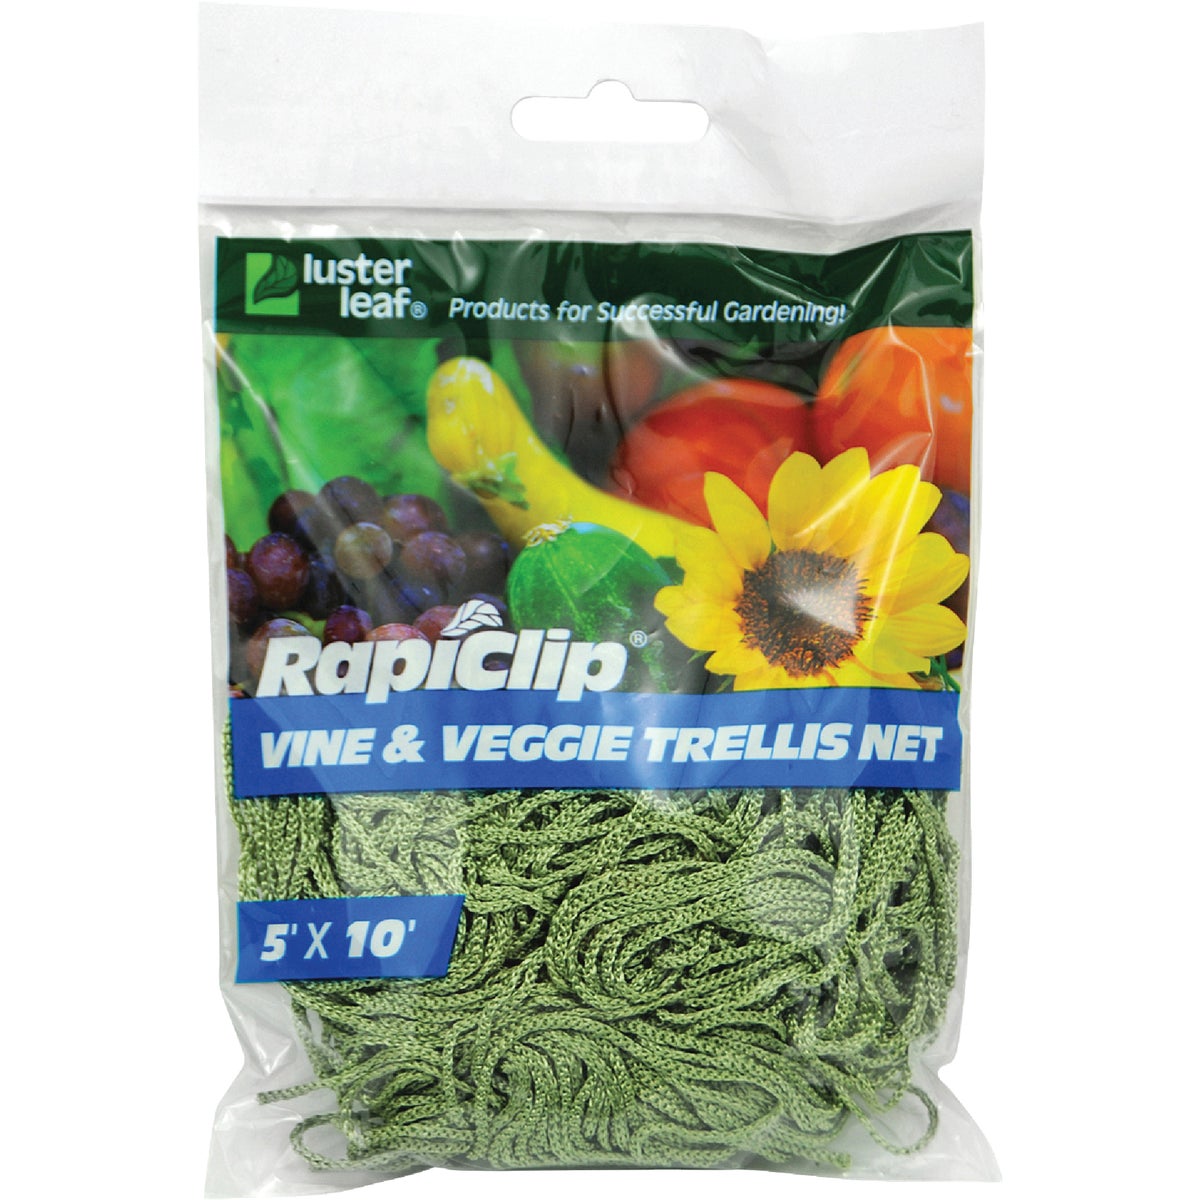 Item 700217, Rapiclip vine &amp; veggie trellis netting is excellent for support of vine